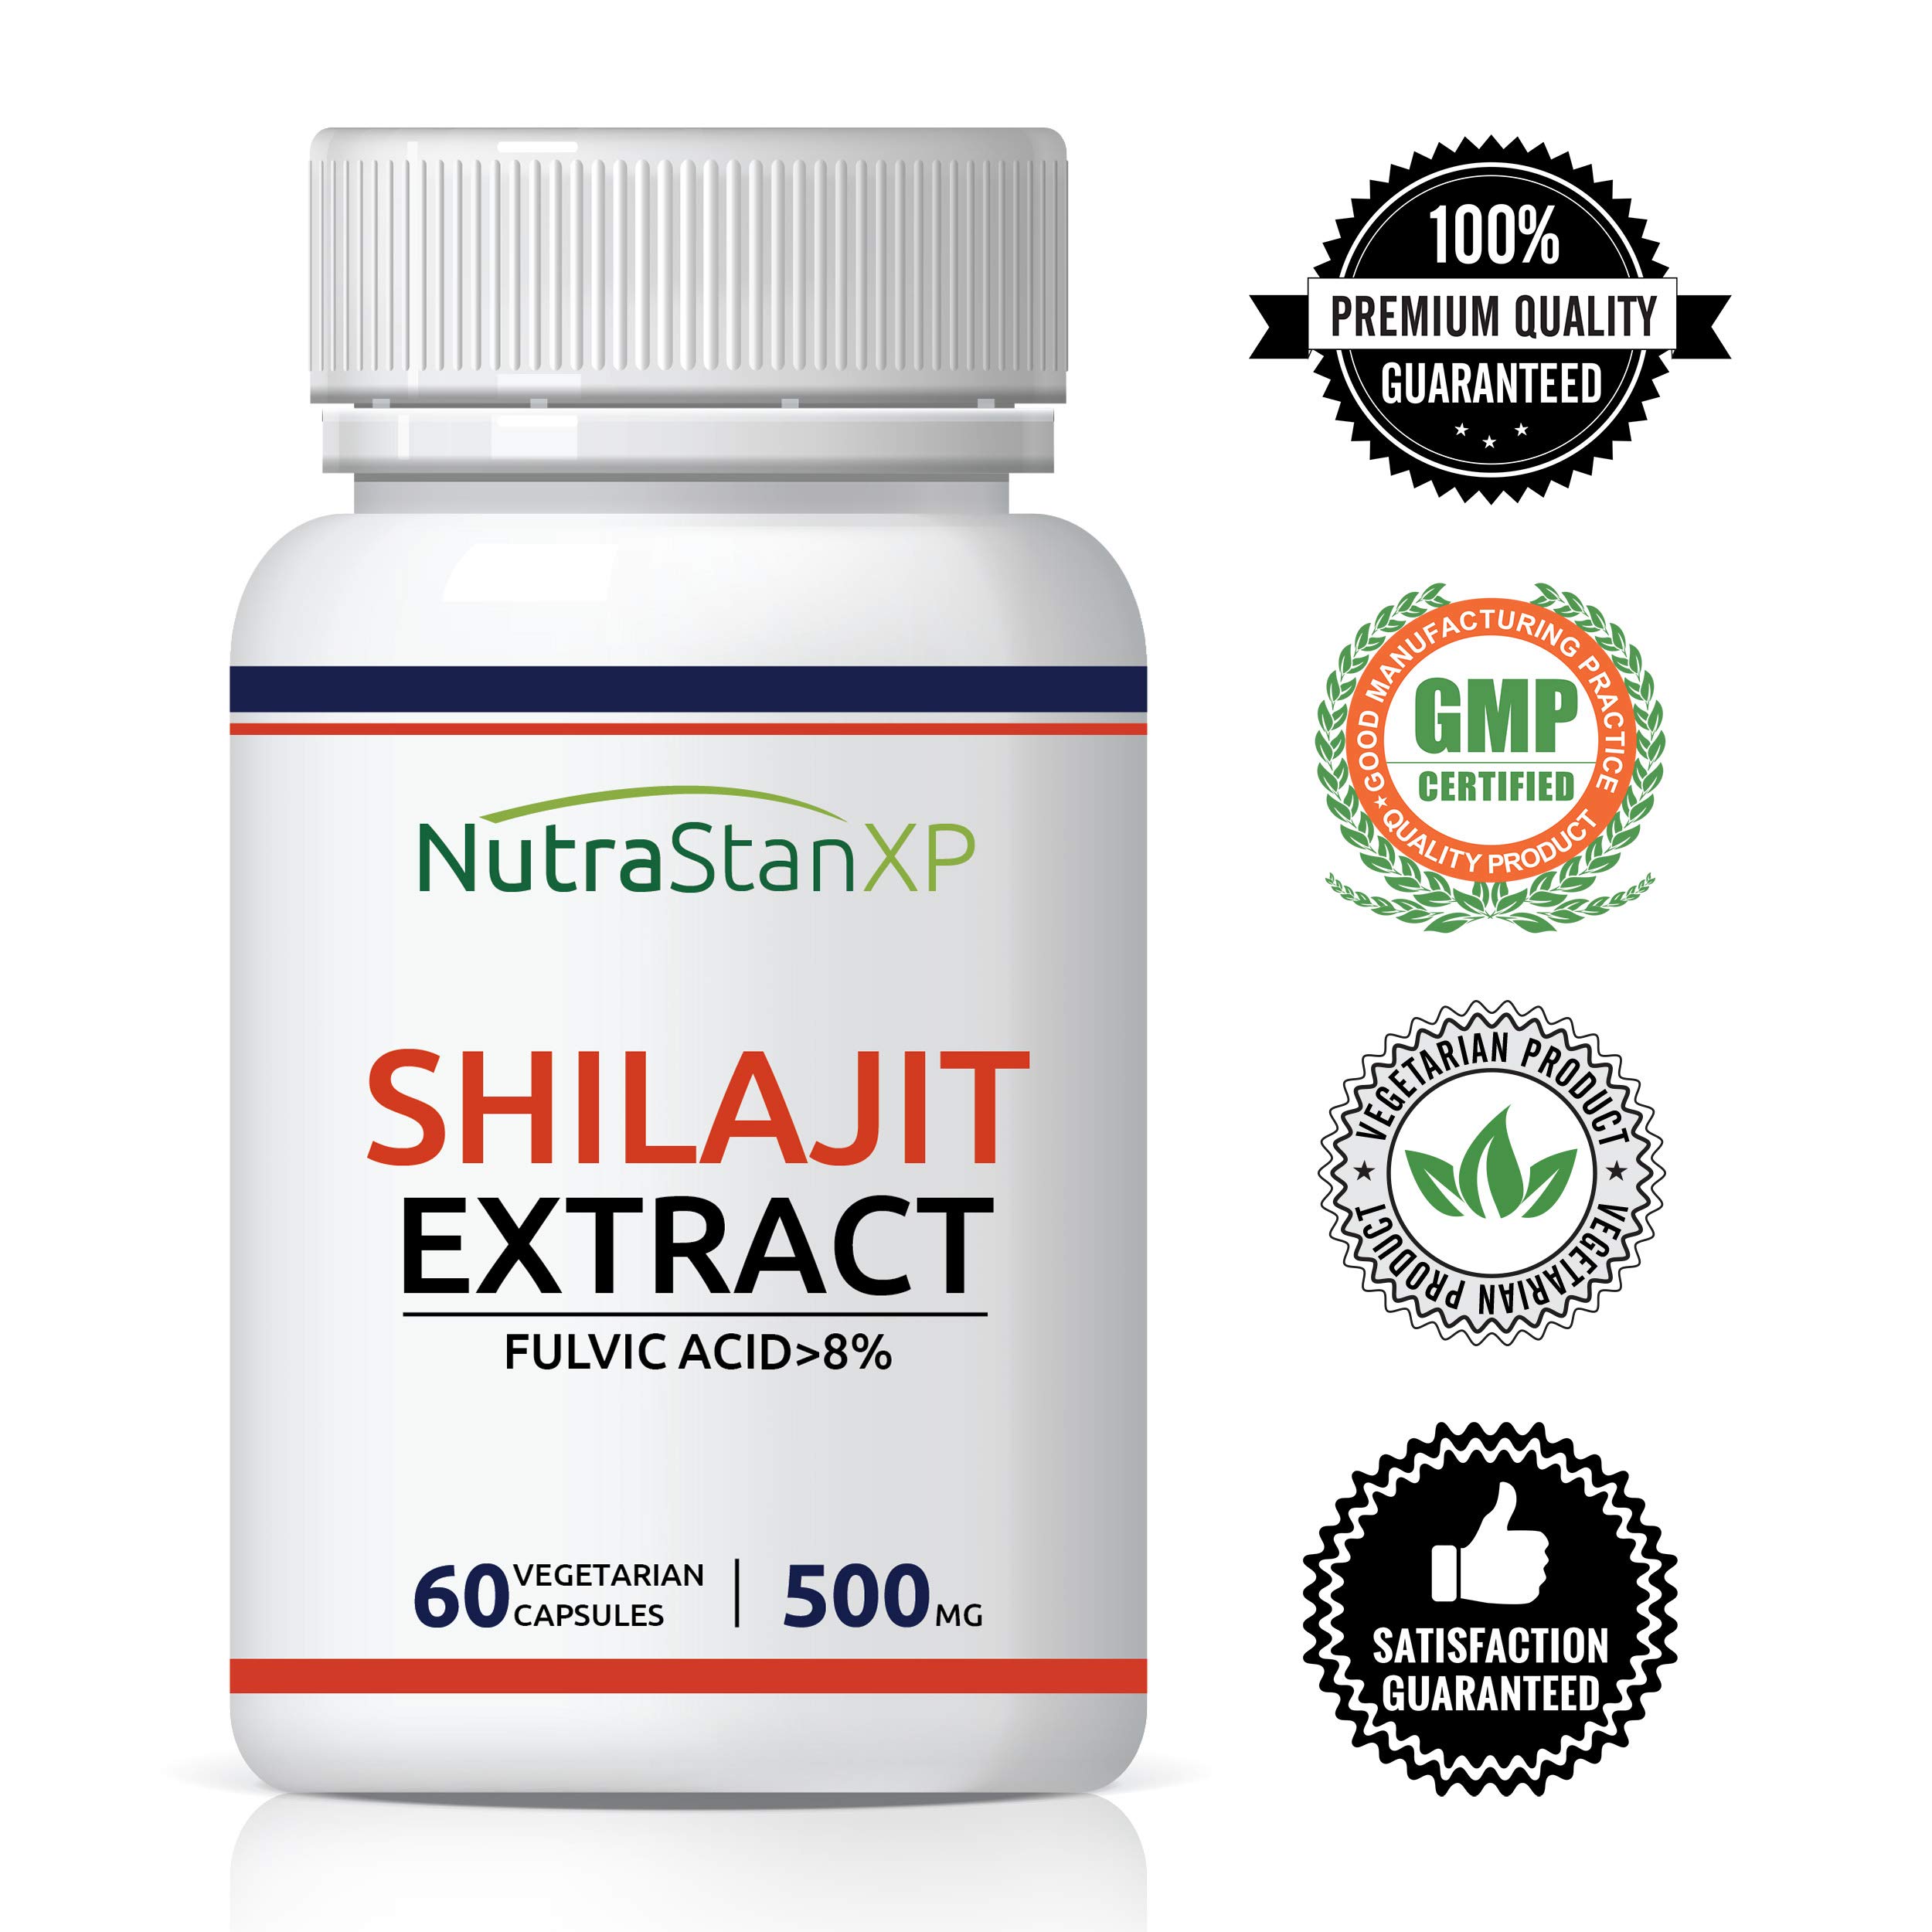 NutrastanXP Shilajit Extract Supplement, 500 mg - 60 Vegetarian Capsules